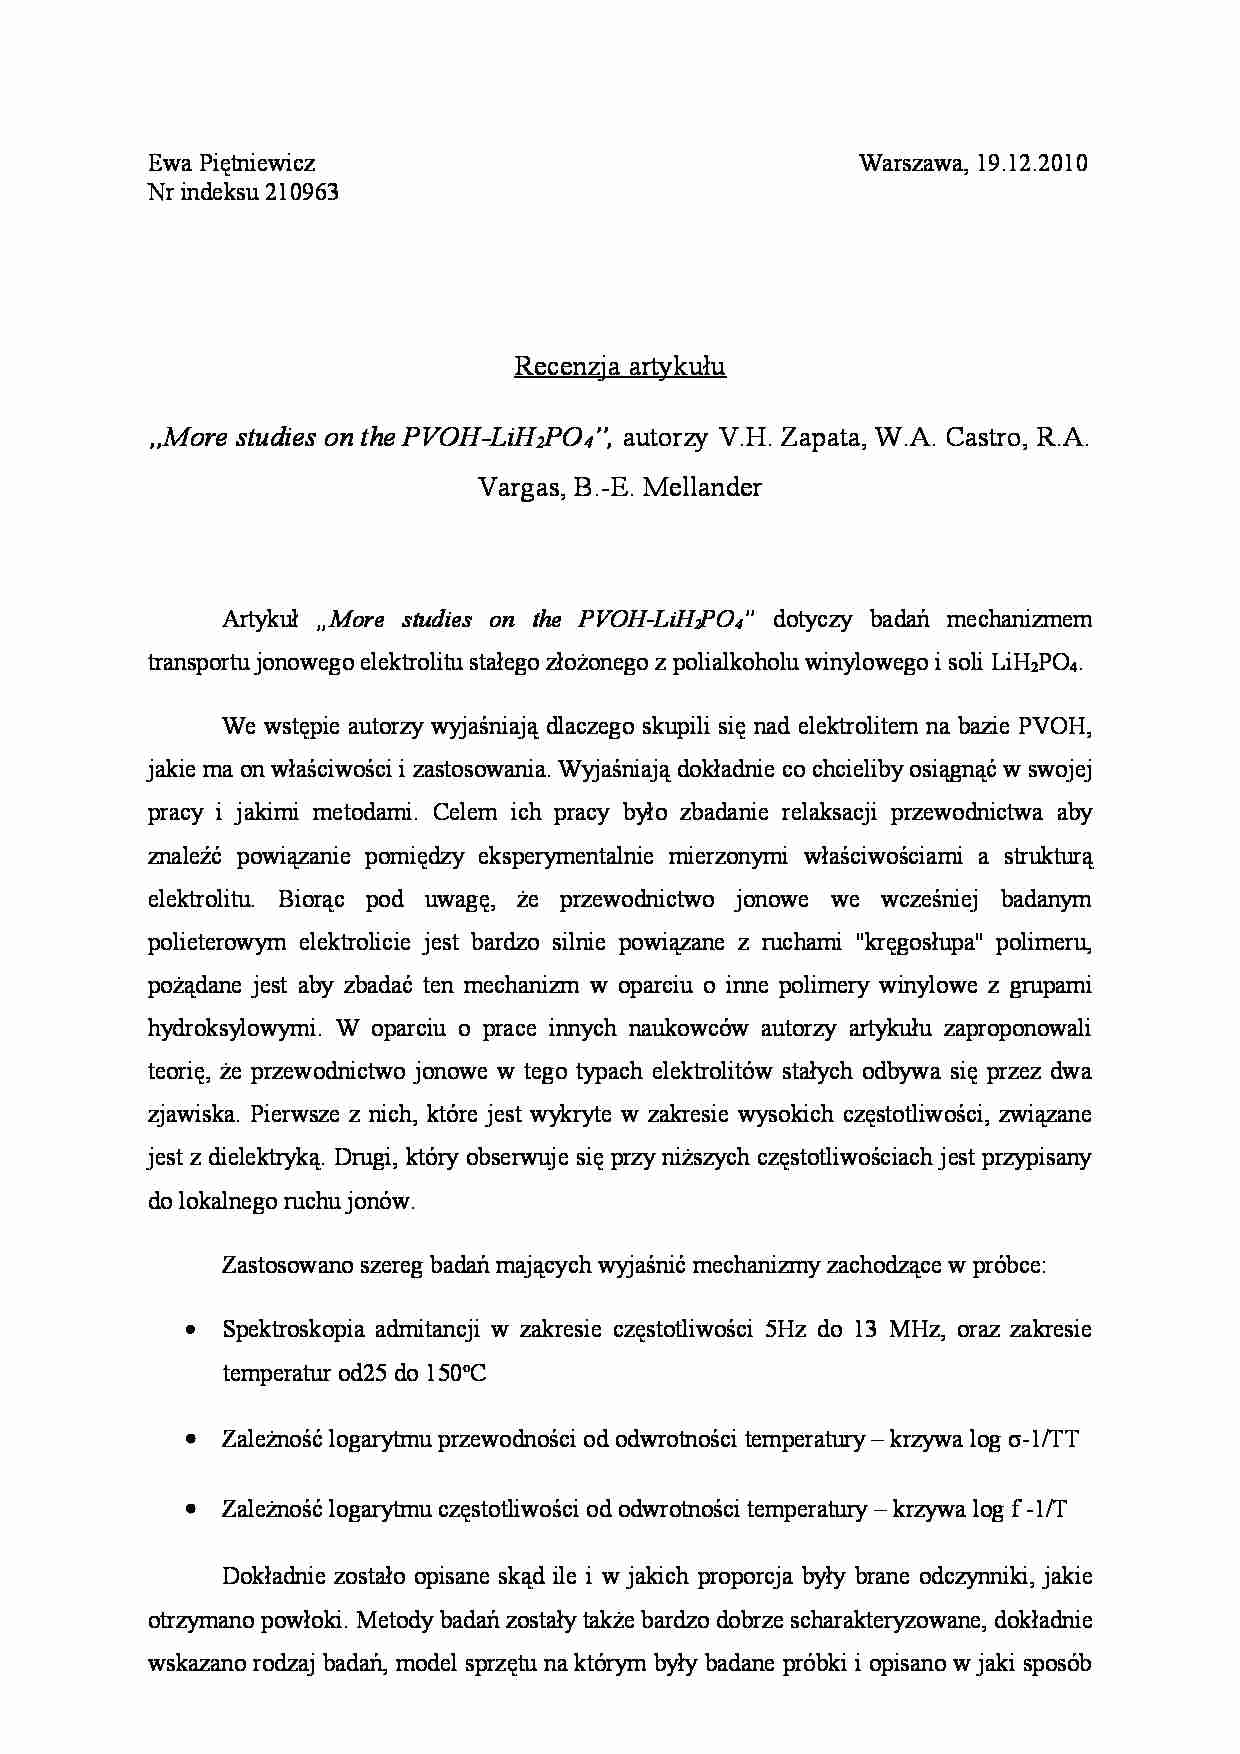 More studies on the PVOH-LiH2PO4-recenzja artykułu - strona 1